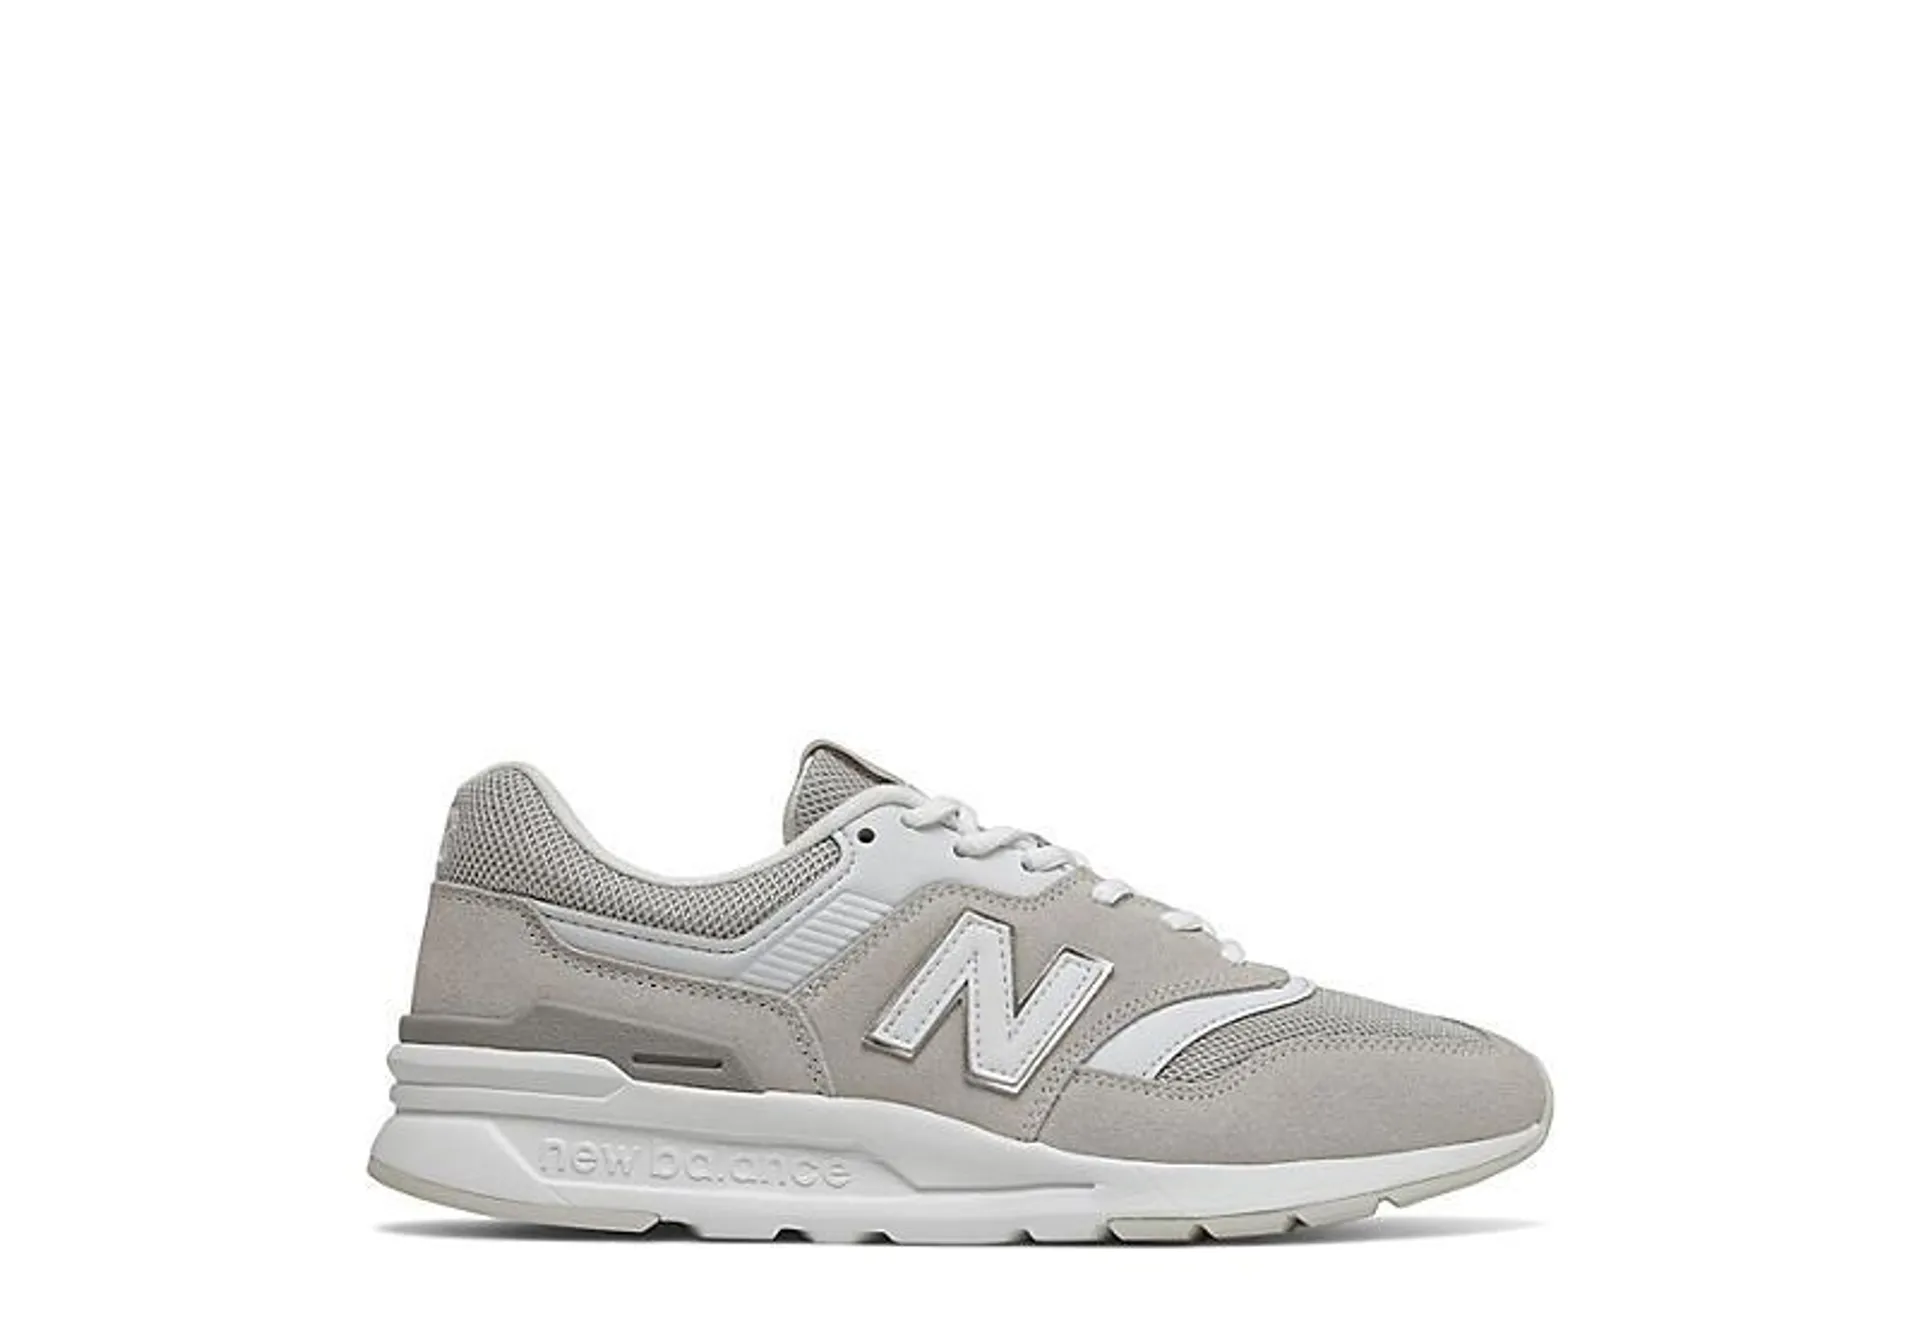 New Balance Womens 997 Sneaker - Grey